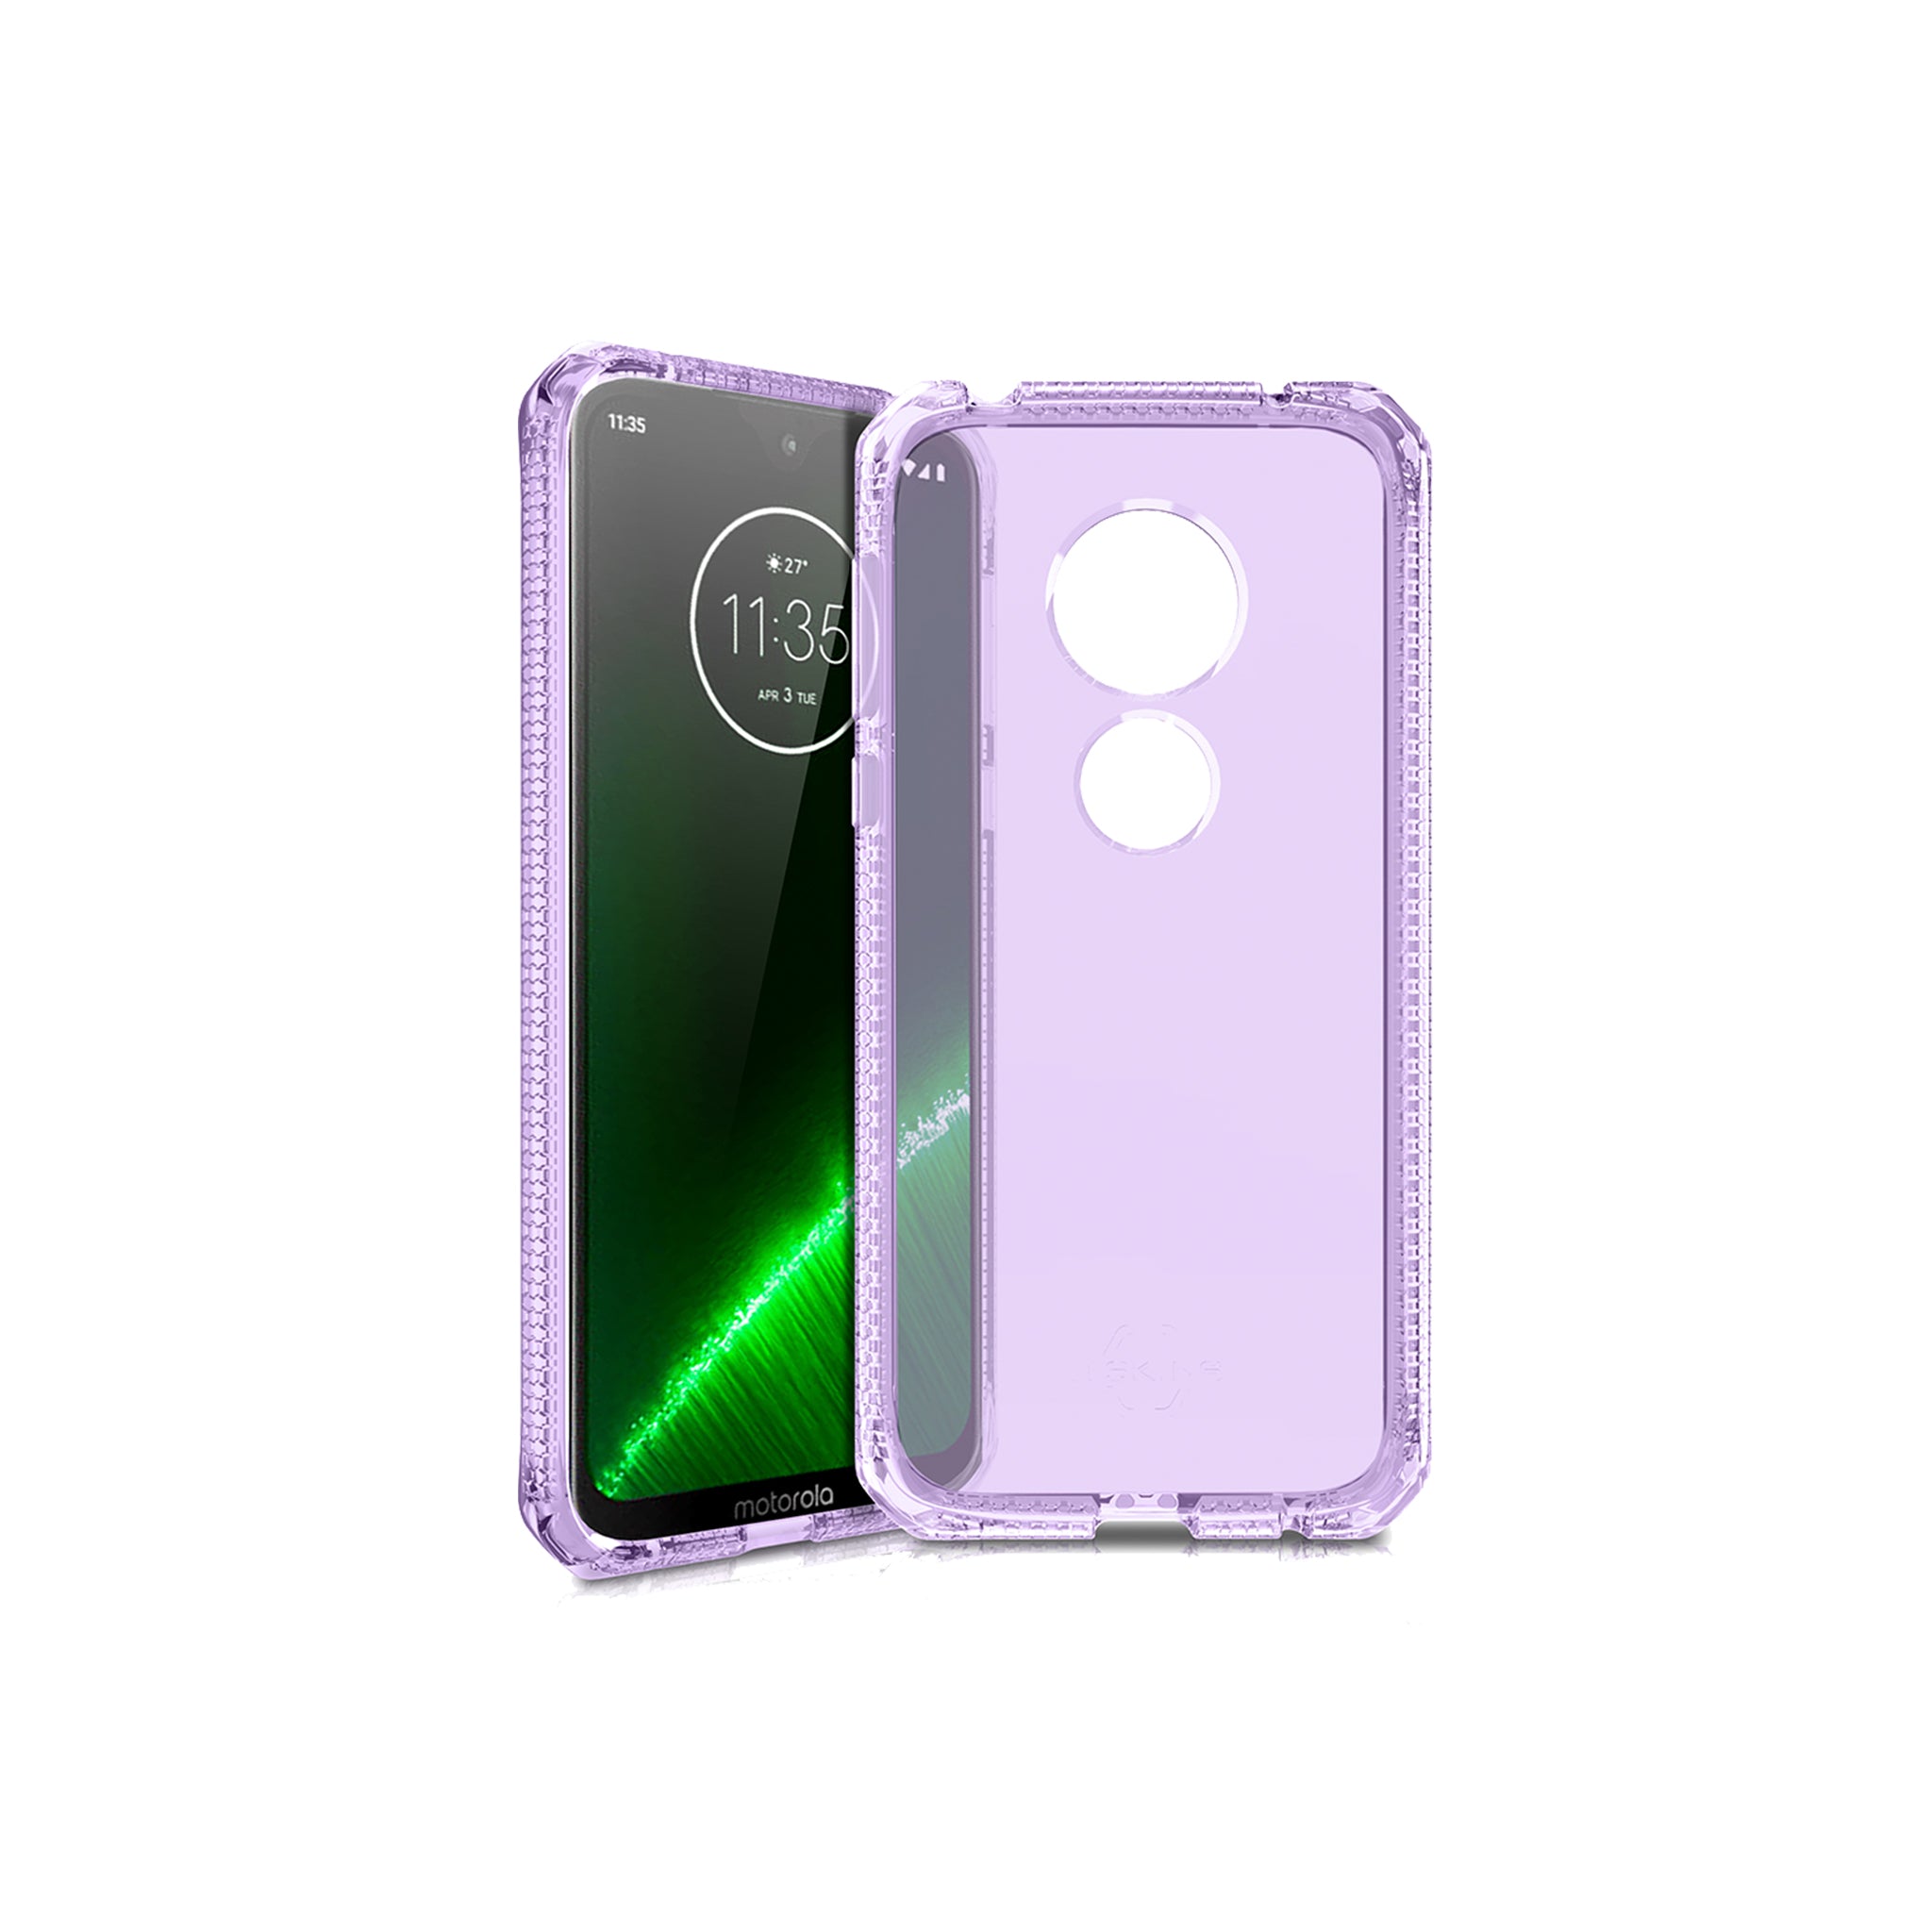 Itskins - Spectrum Clear Case For Motorola Moto G7 Play - Light Purple